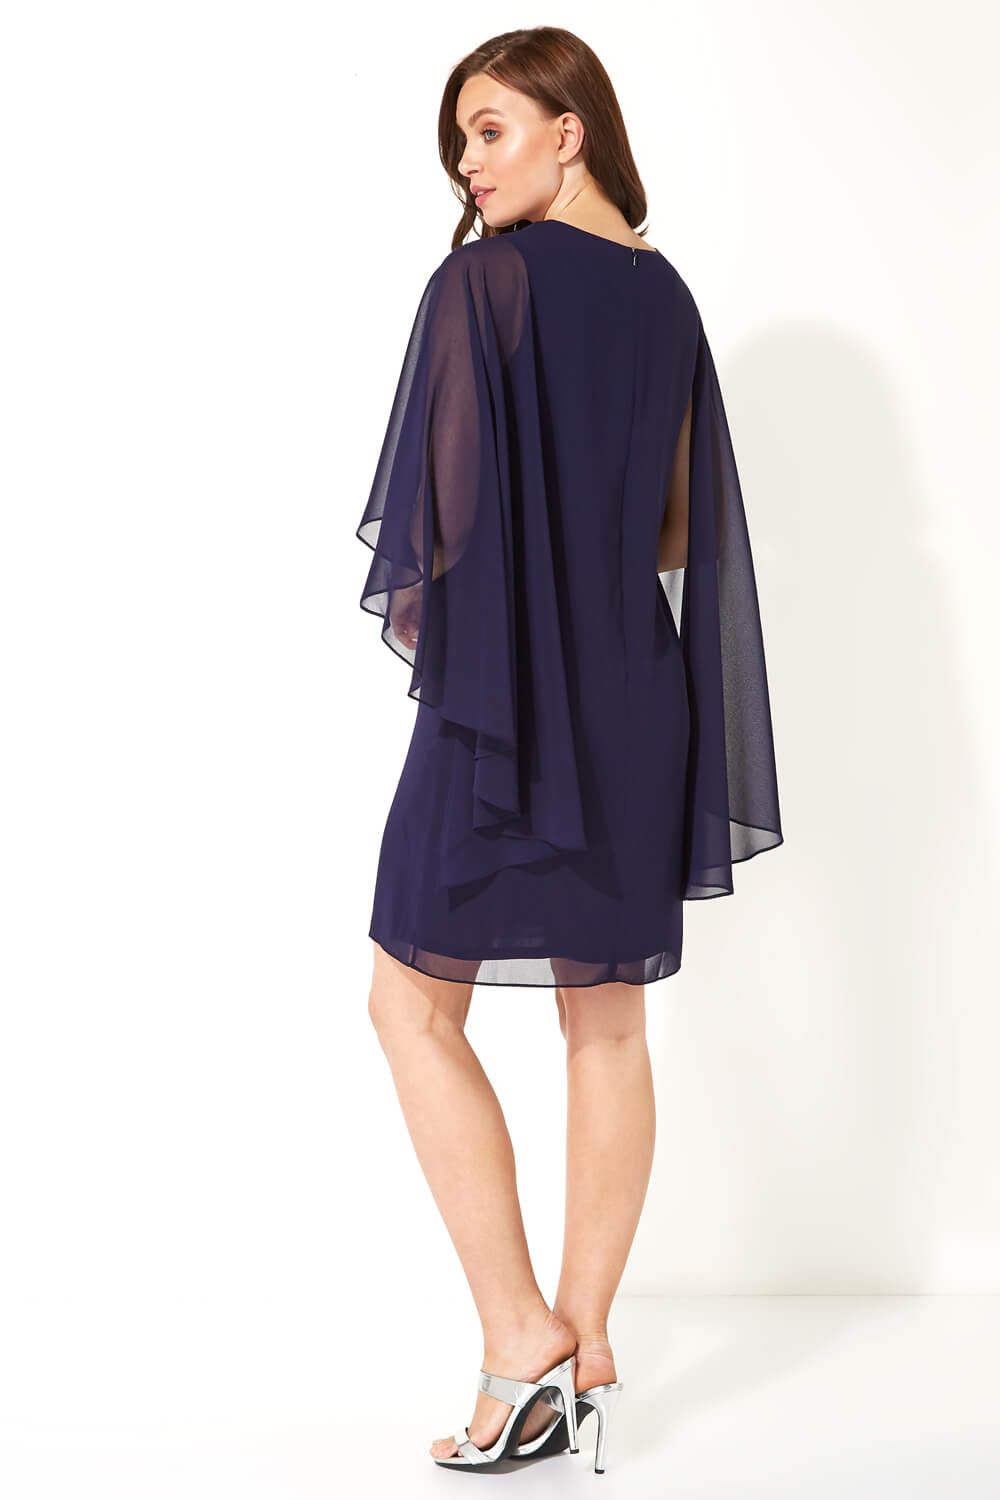 Midnight Blue Chiffon Cape Sleeve Dress, Image 3 of 5